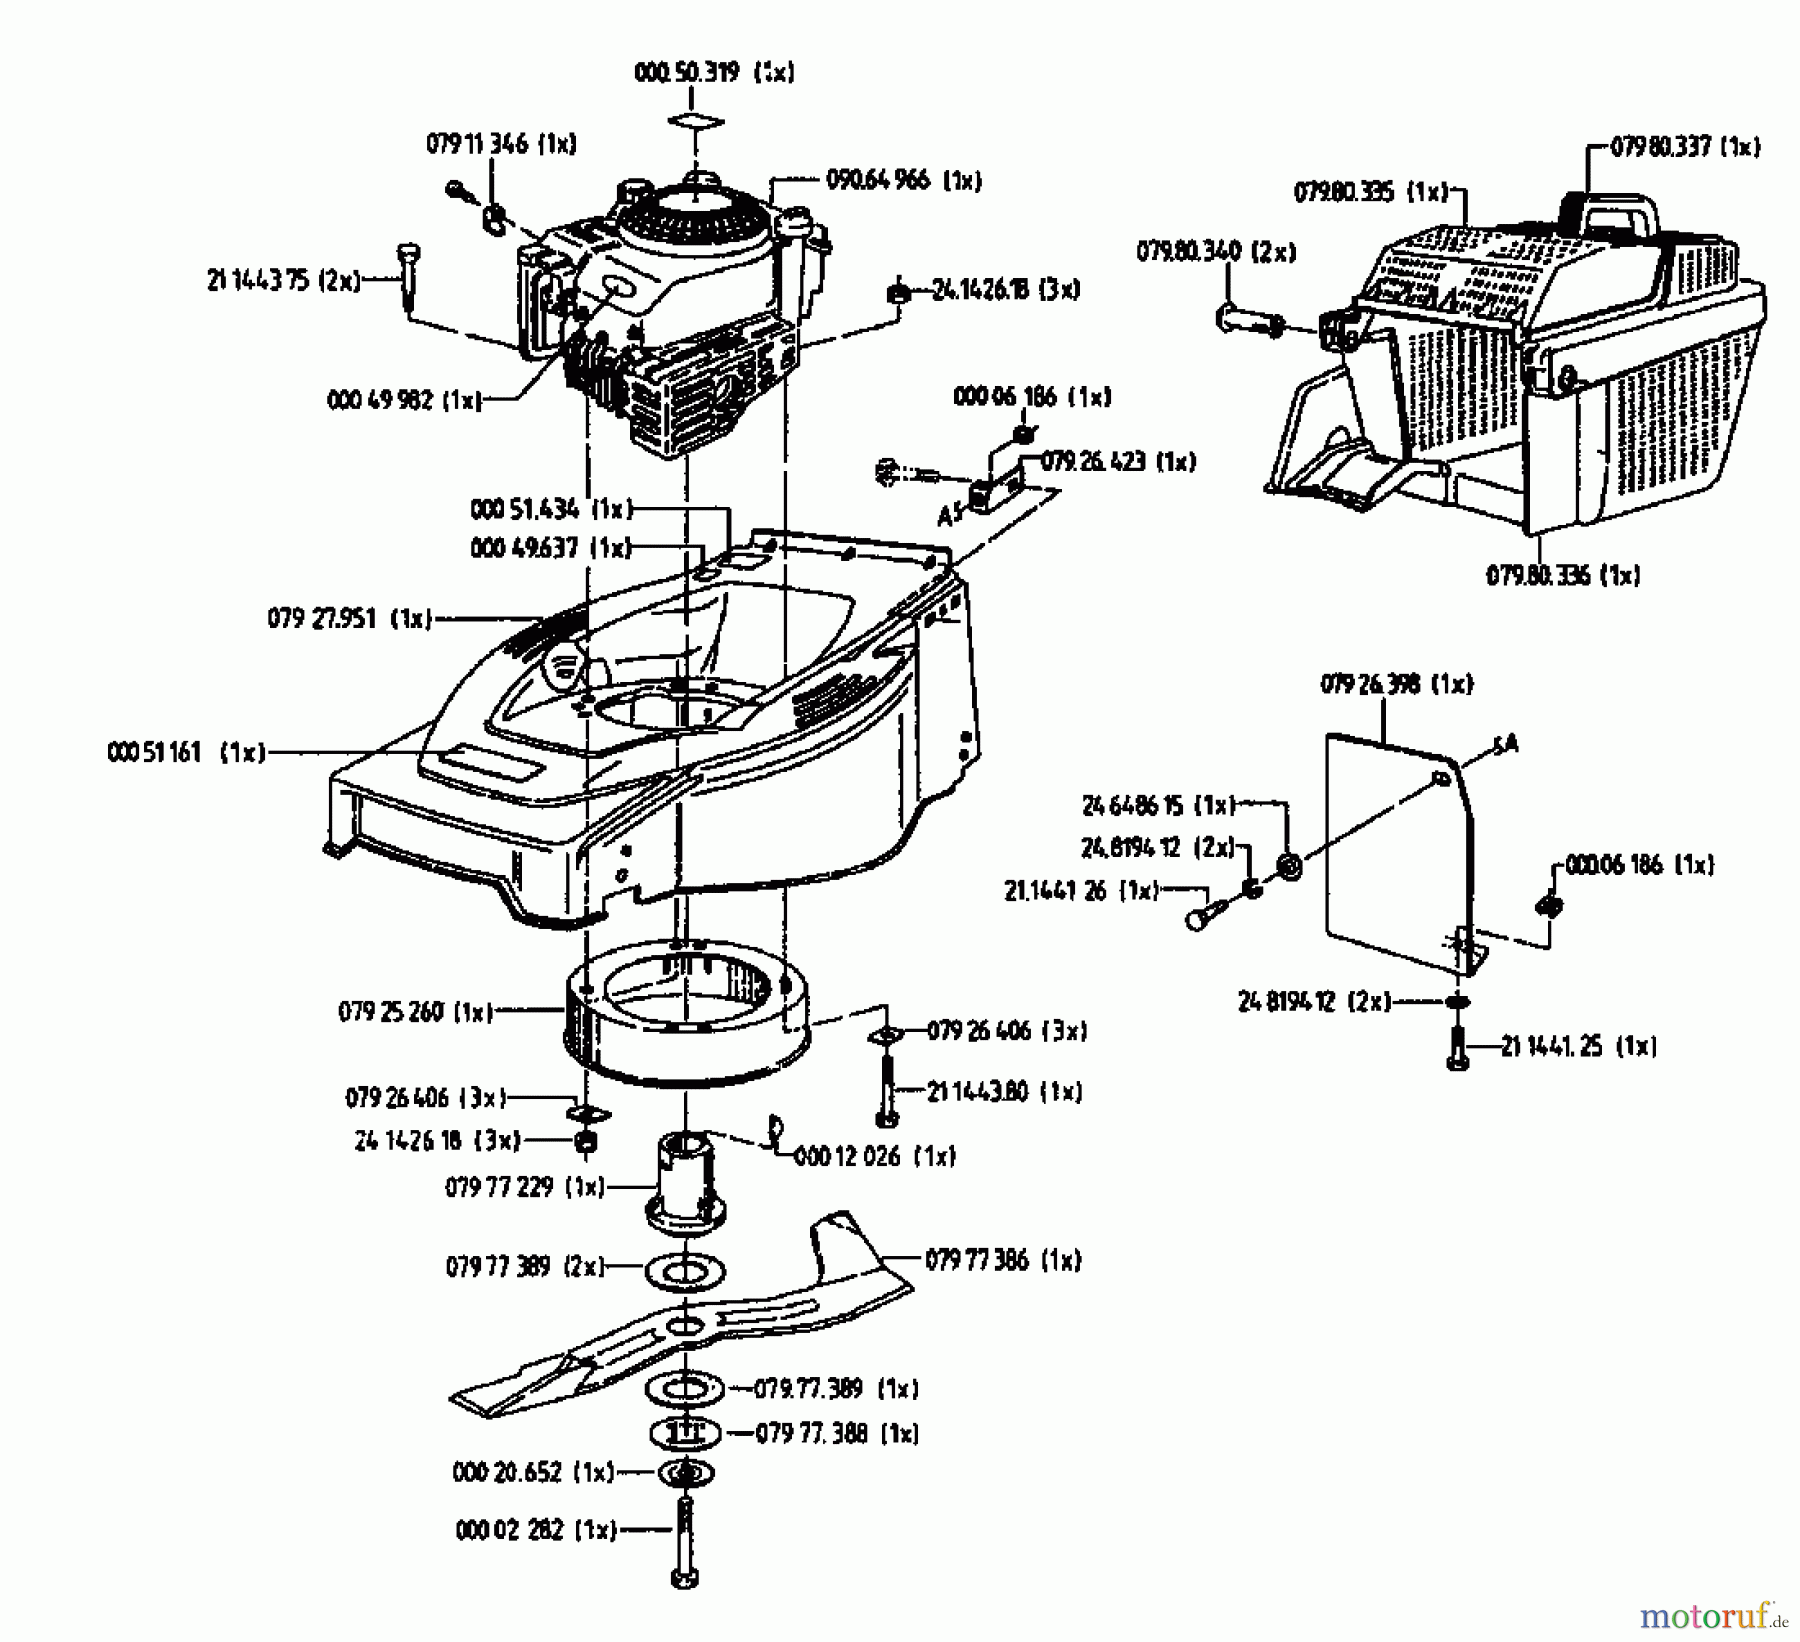  Gutbrod Petrol mower HB 48 02814.03  (1994) Basic machine